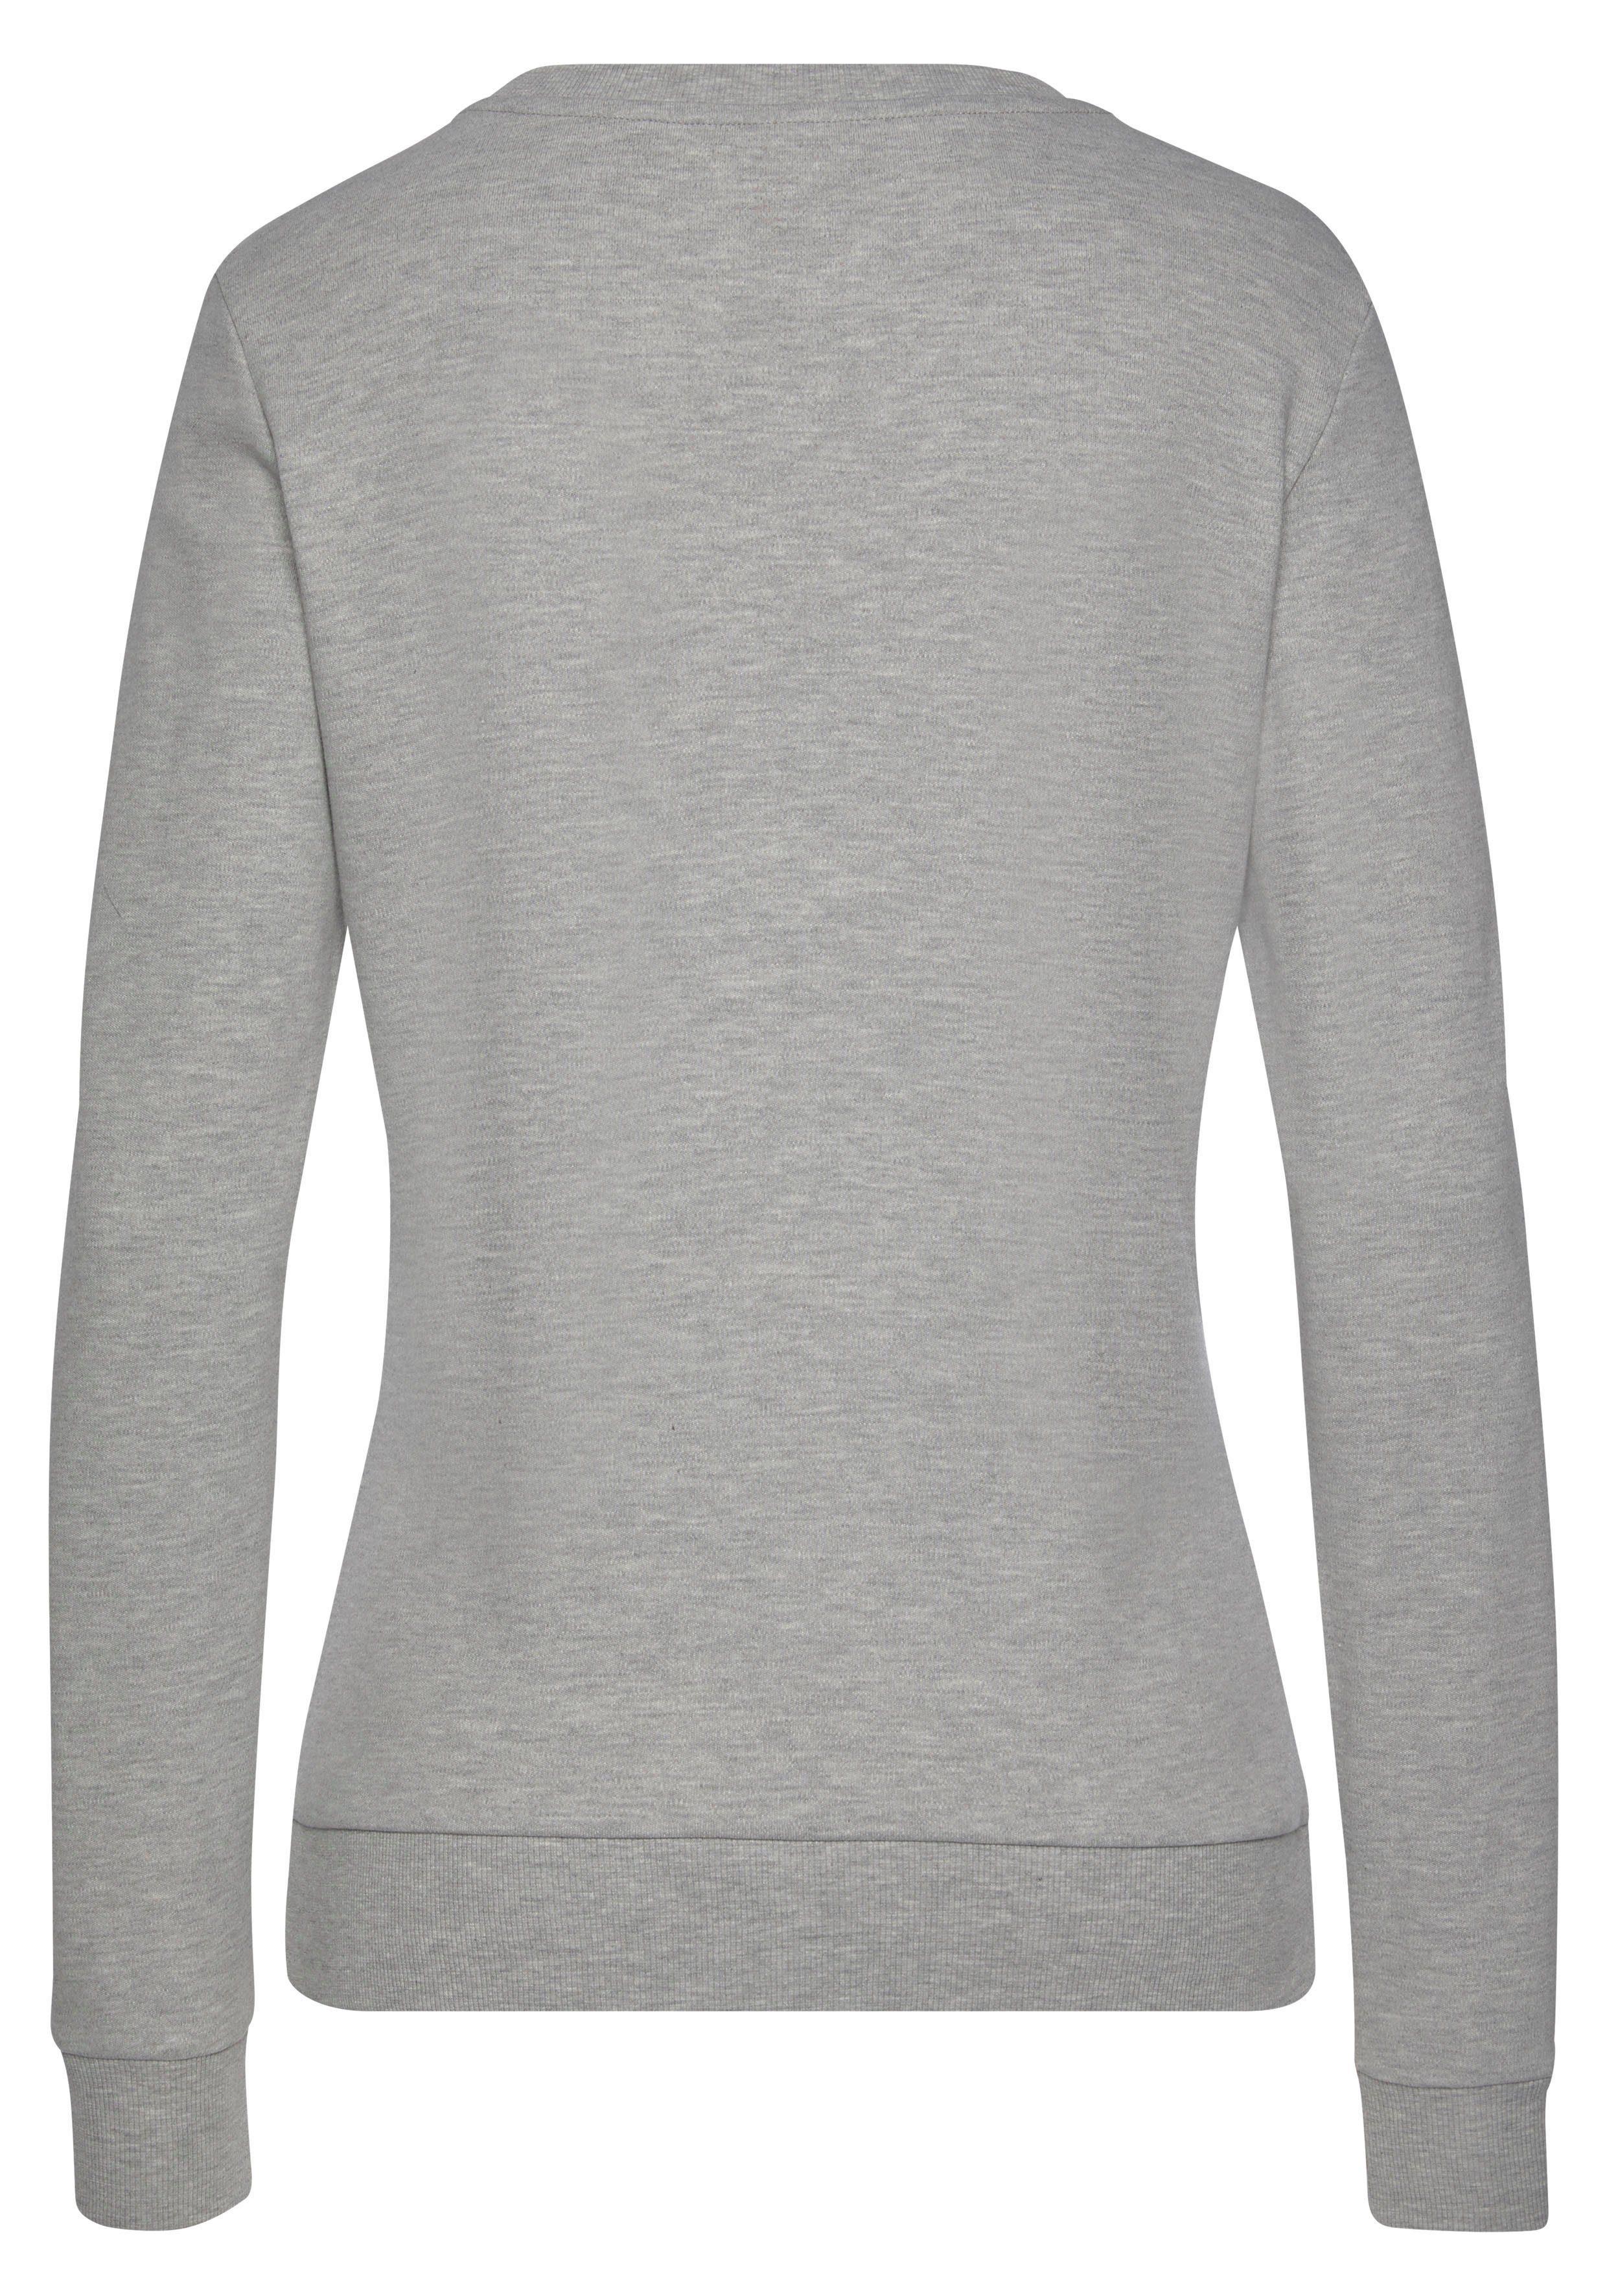 Loungewear Loungeshirt Sweatshirt mit hellgrau-meliert Logostickerei, Loungewear, Bench. Loungeanzug